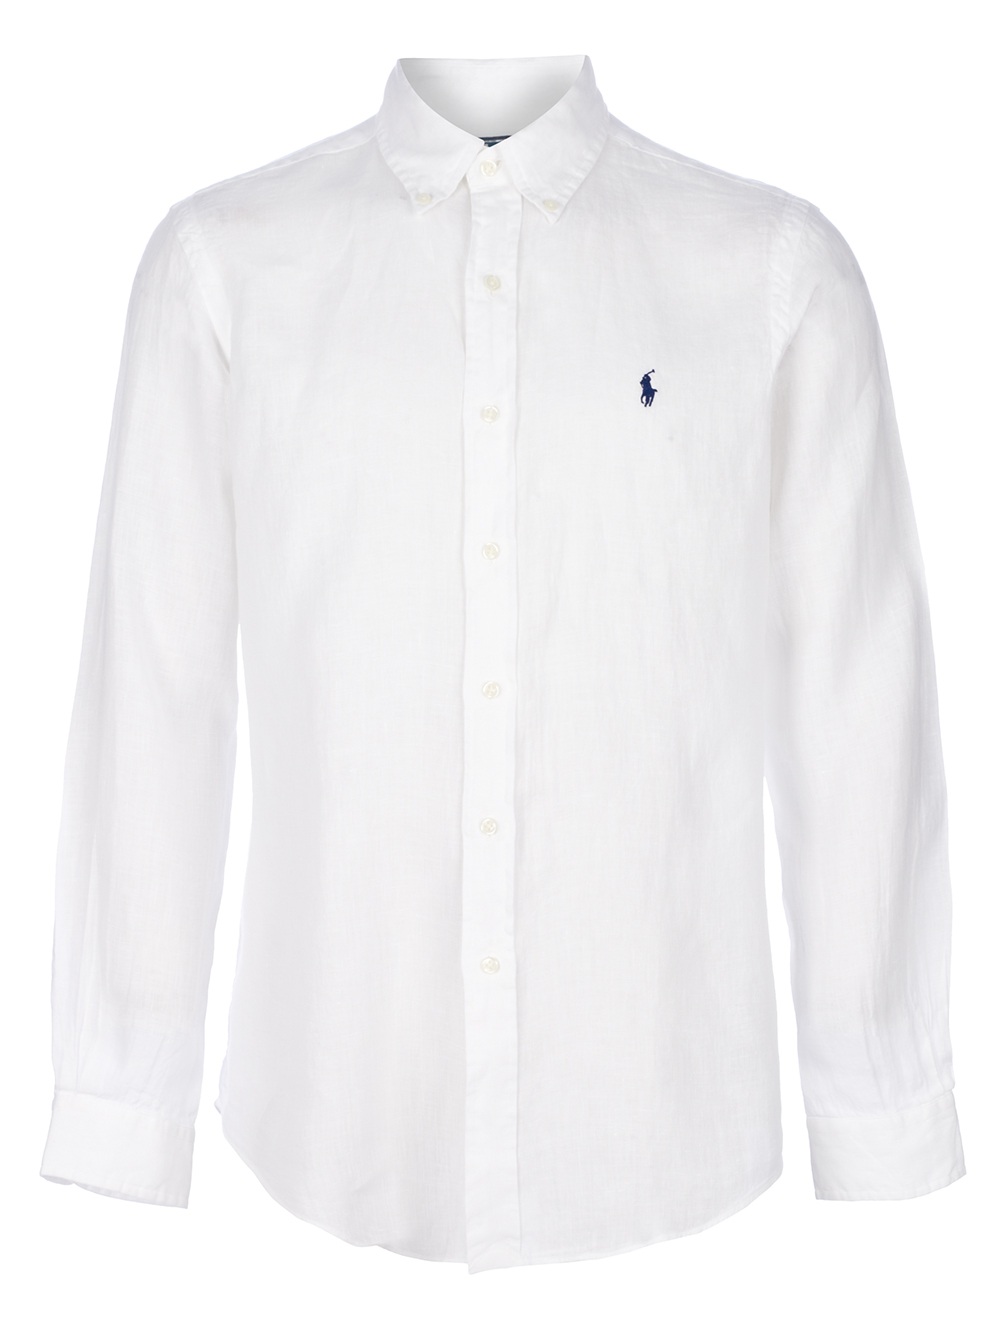 Polo Ralph Lauren Button Down Shirt in White for Men - Lyst